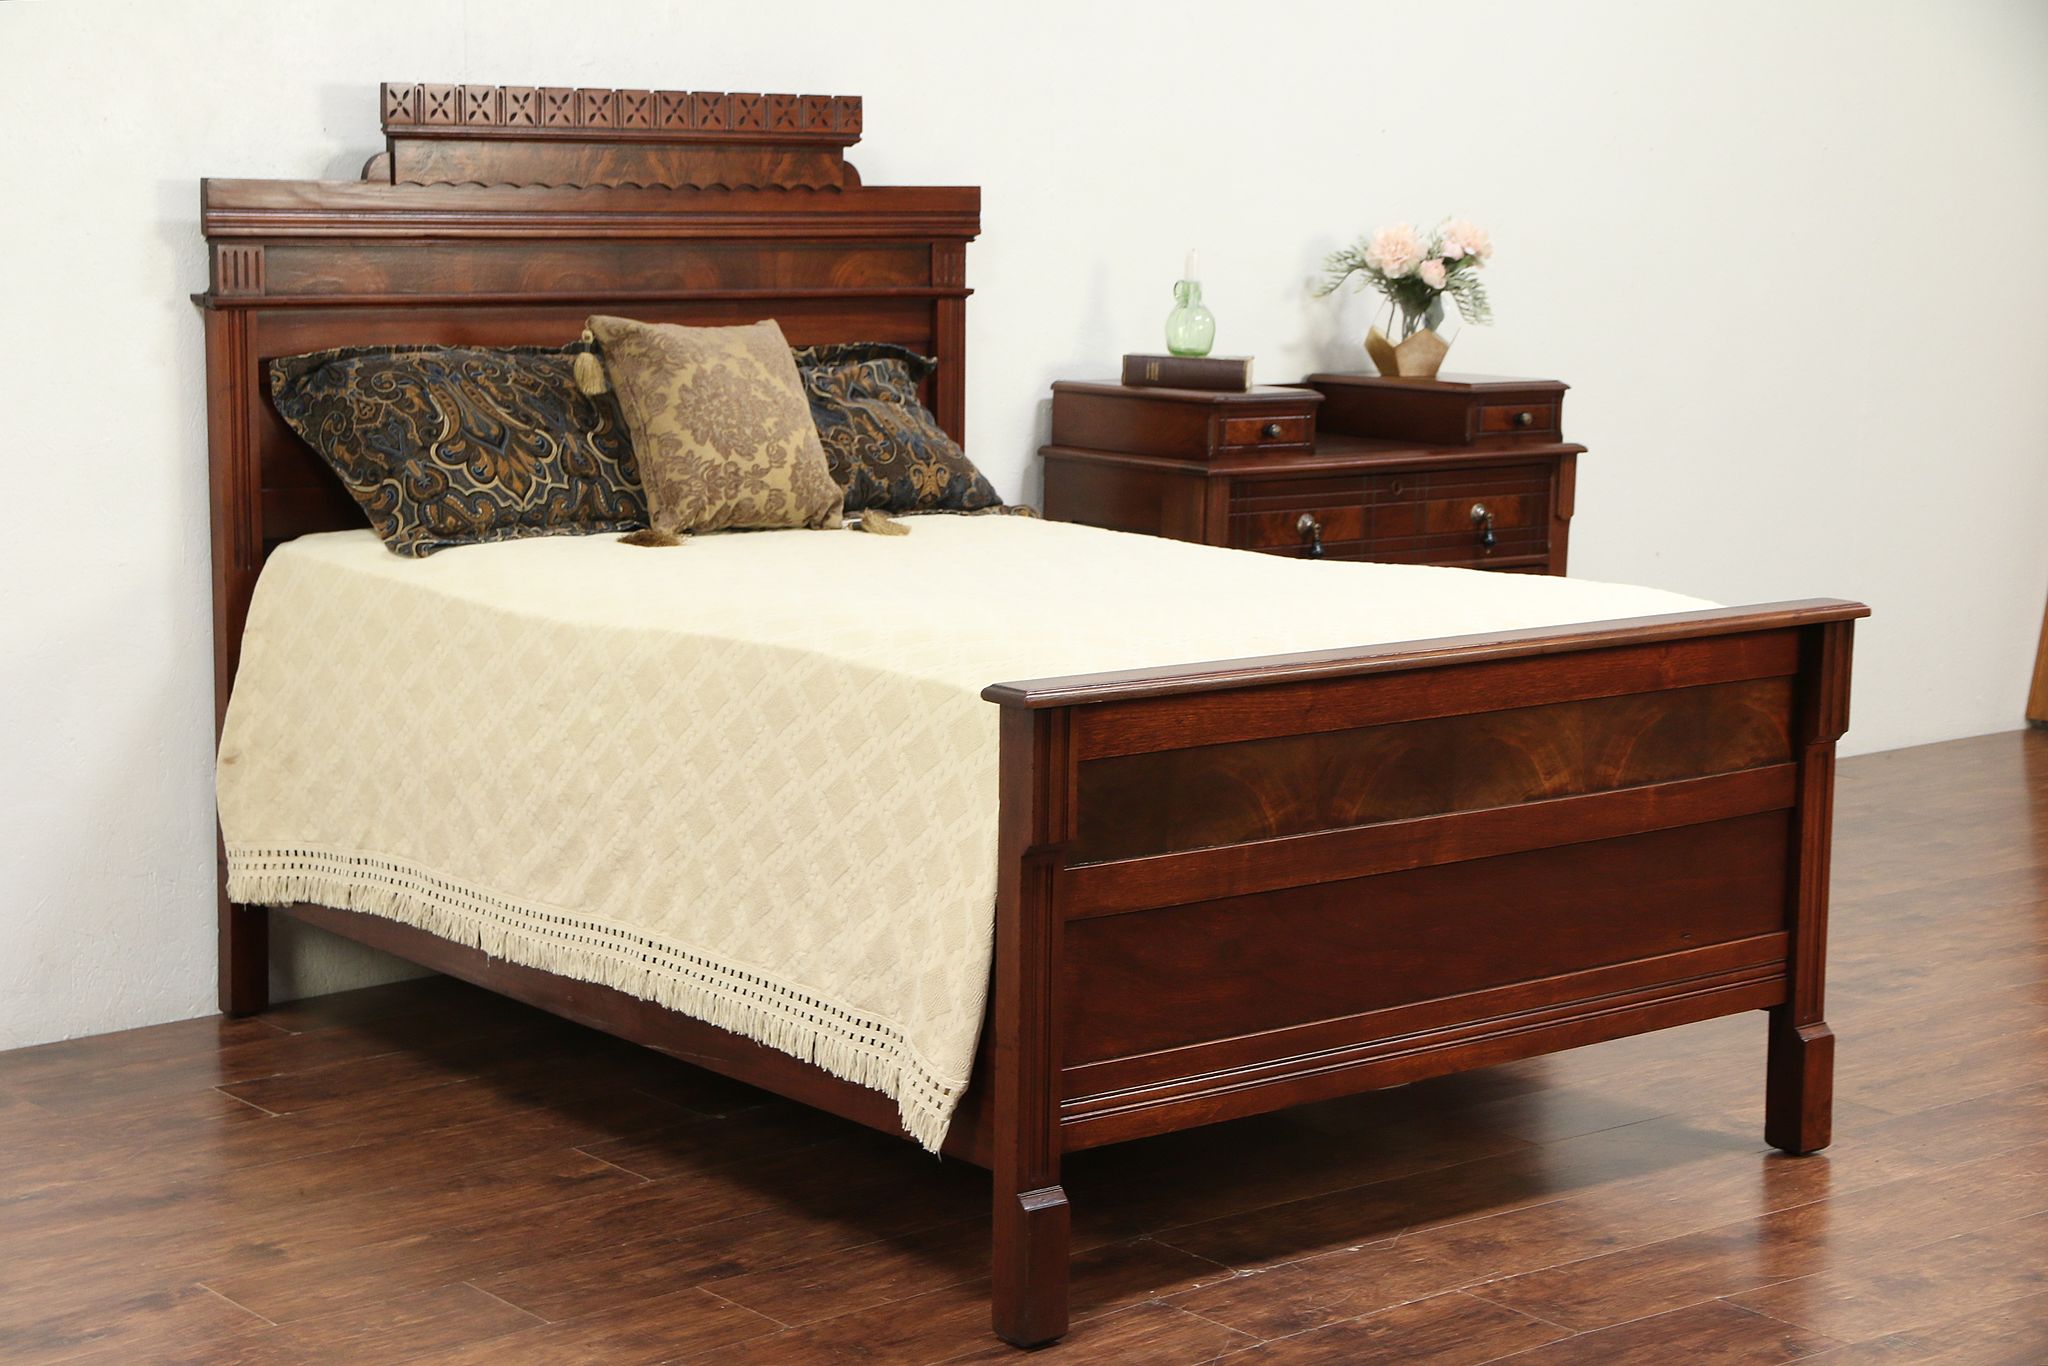 1896 eastlake bedroom furniture